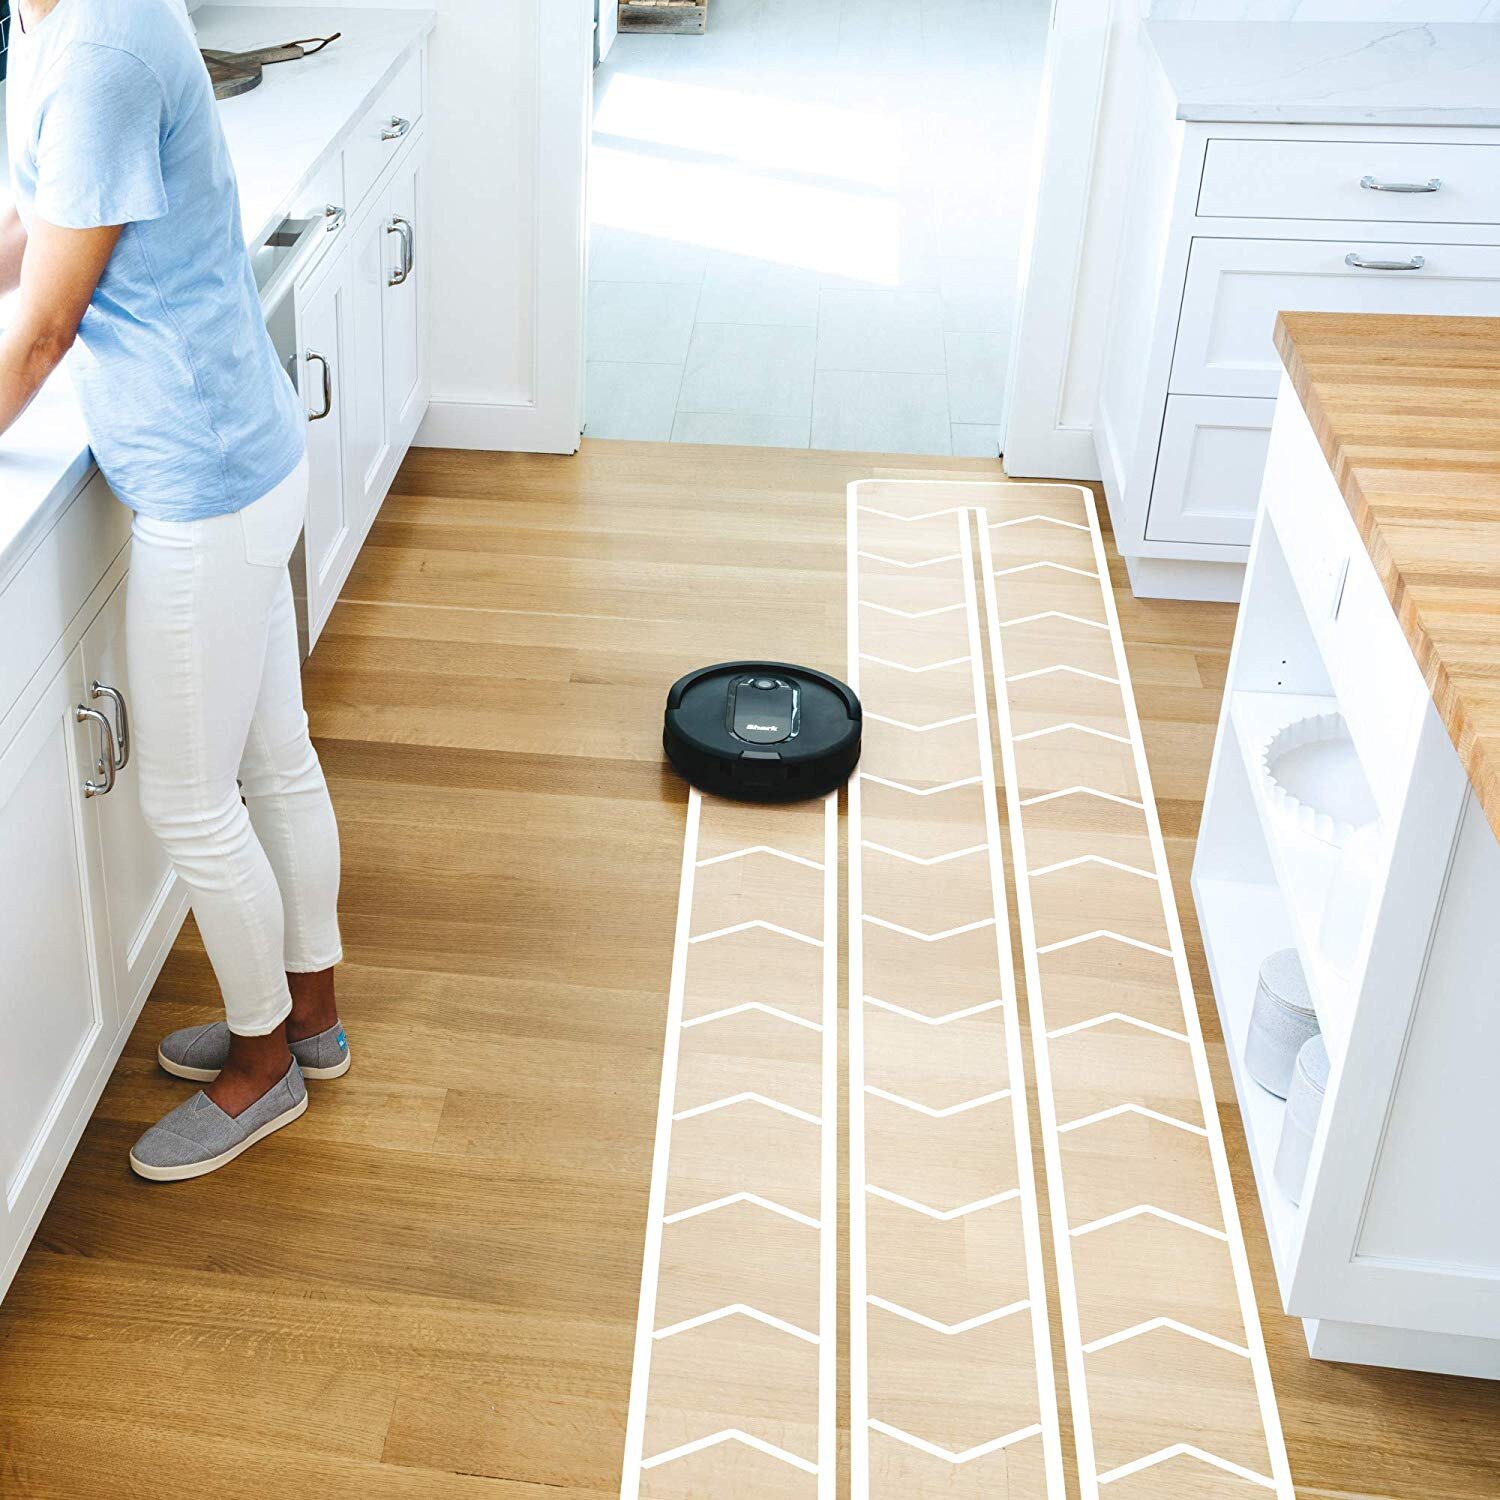 Best Robot Vacuums For Laminate Floors, Best Roomba For Laminate Floors